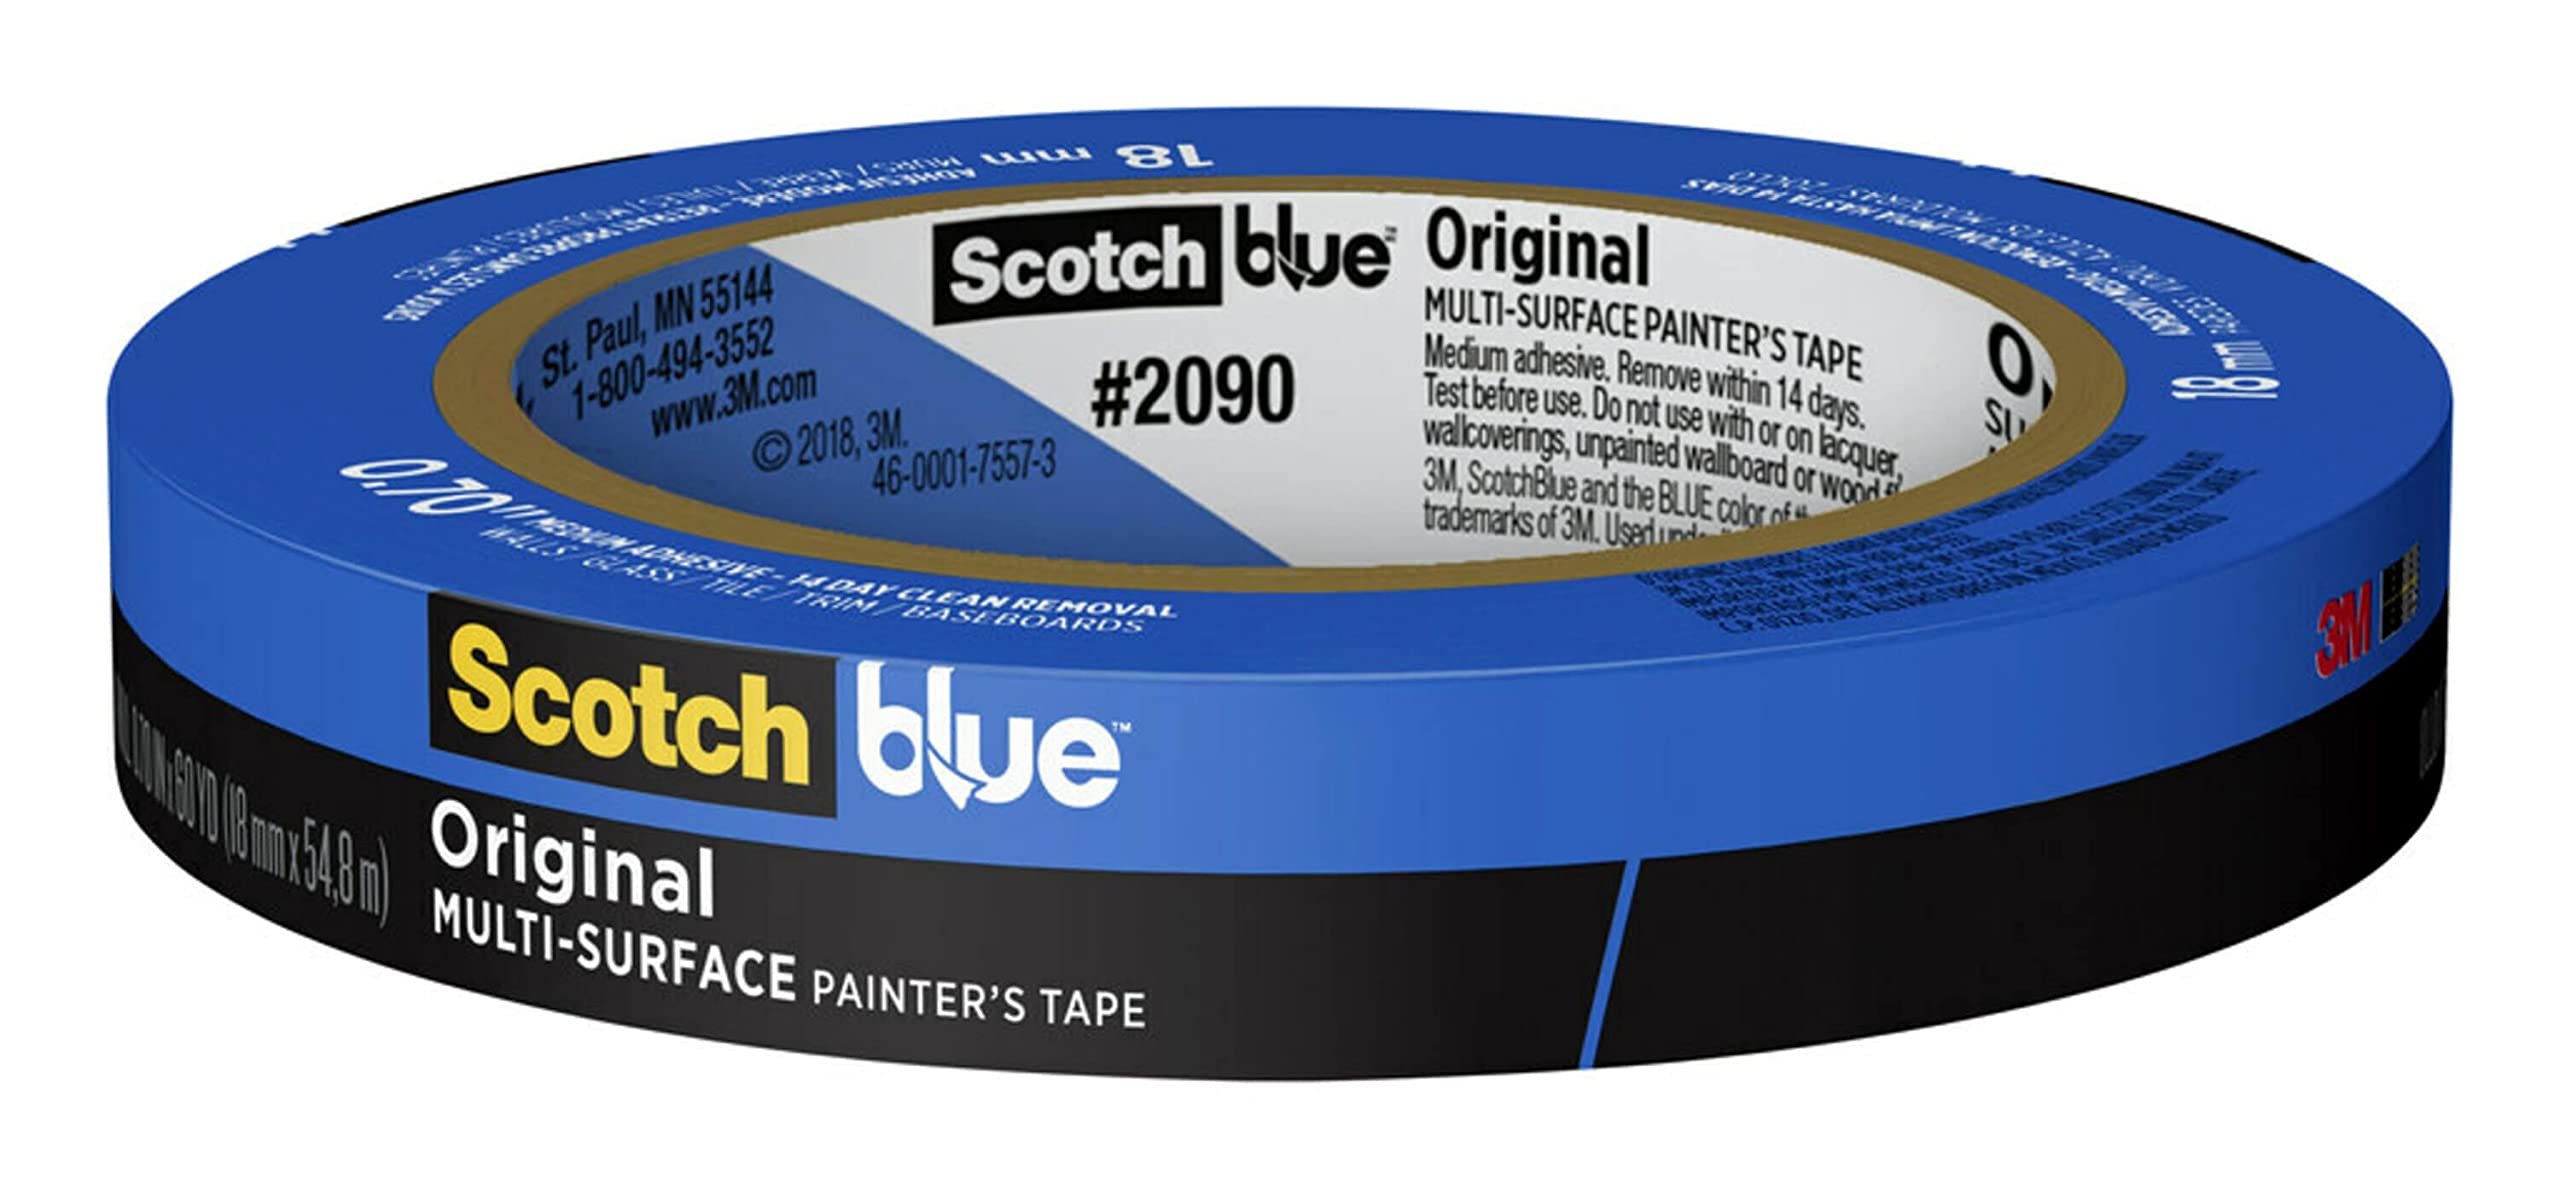 Scotch Ruban de peintre multi-surfaces bleu Original